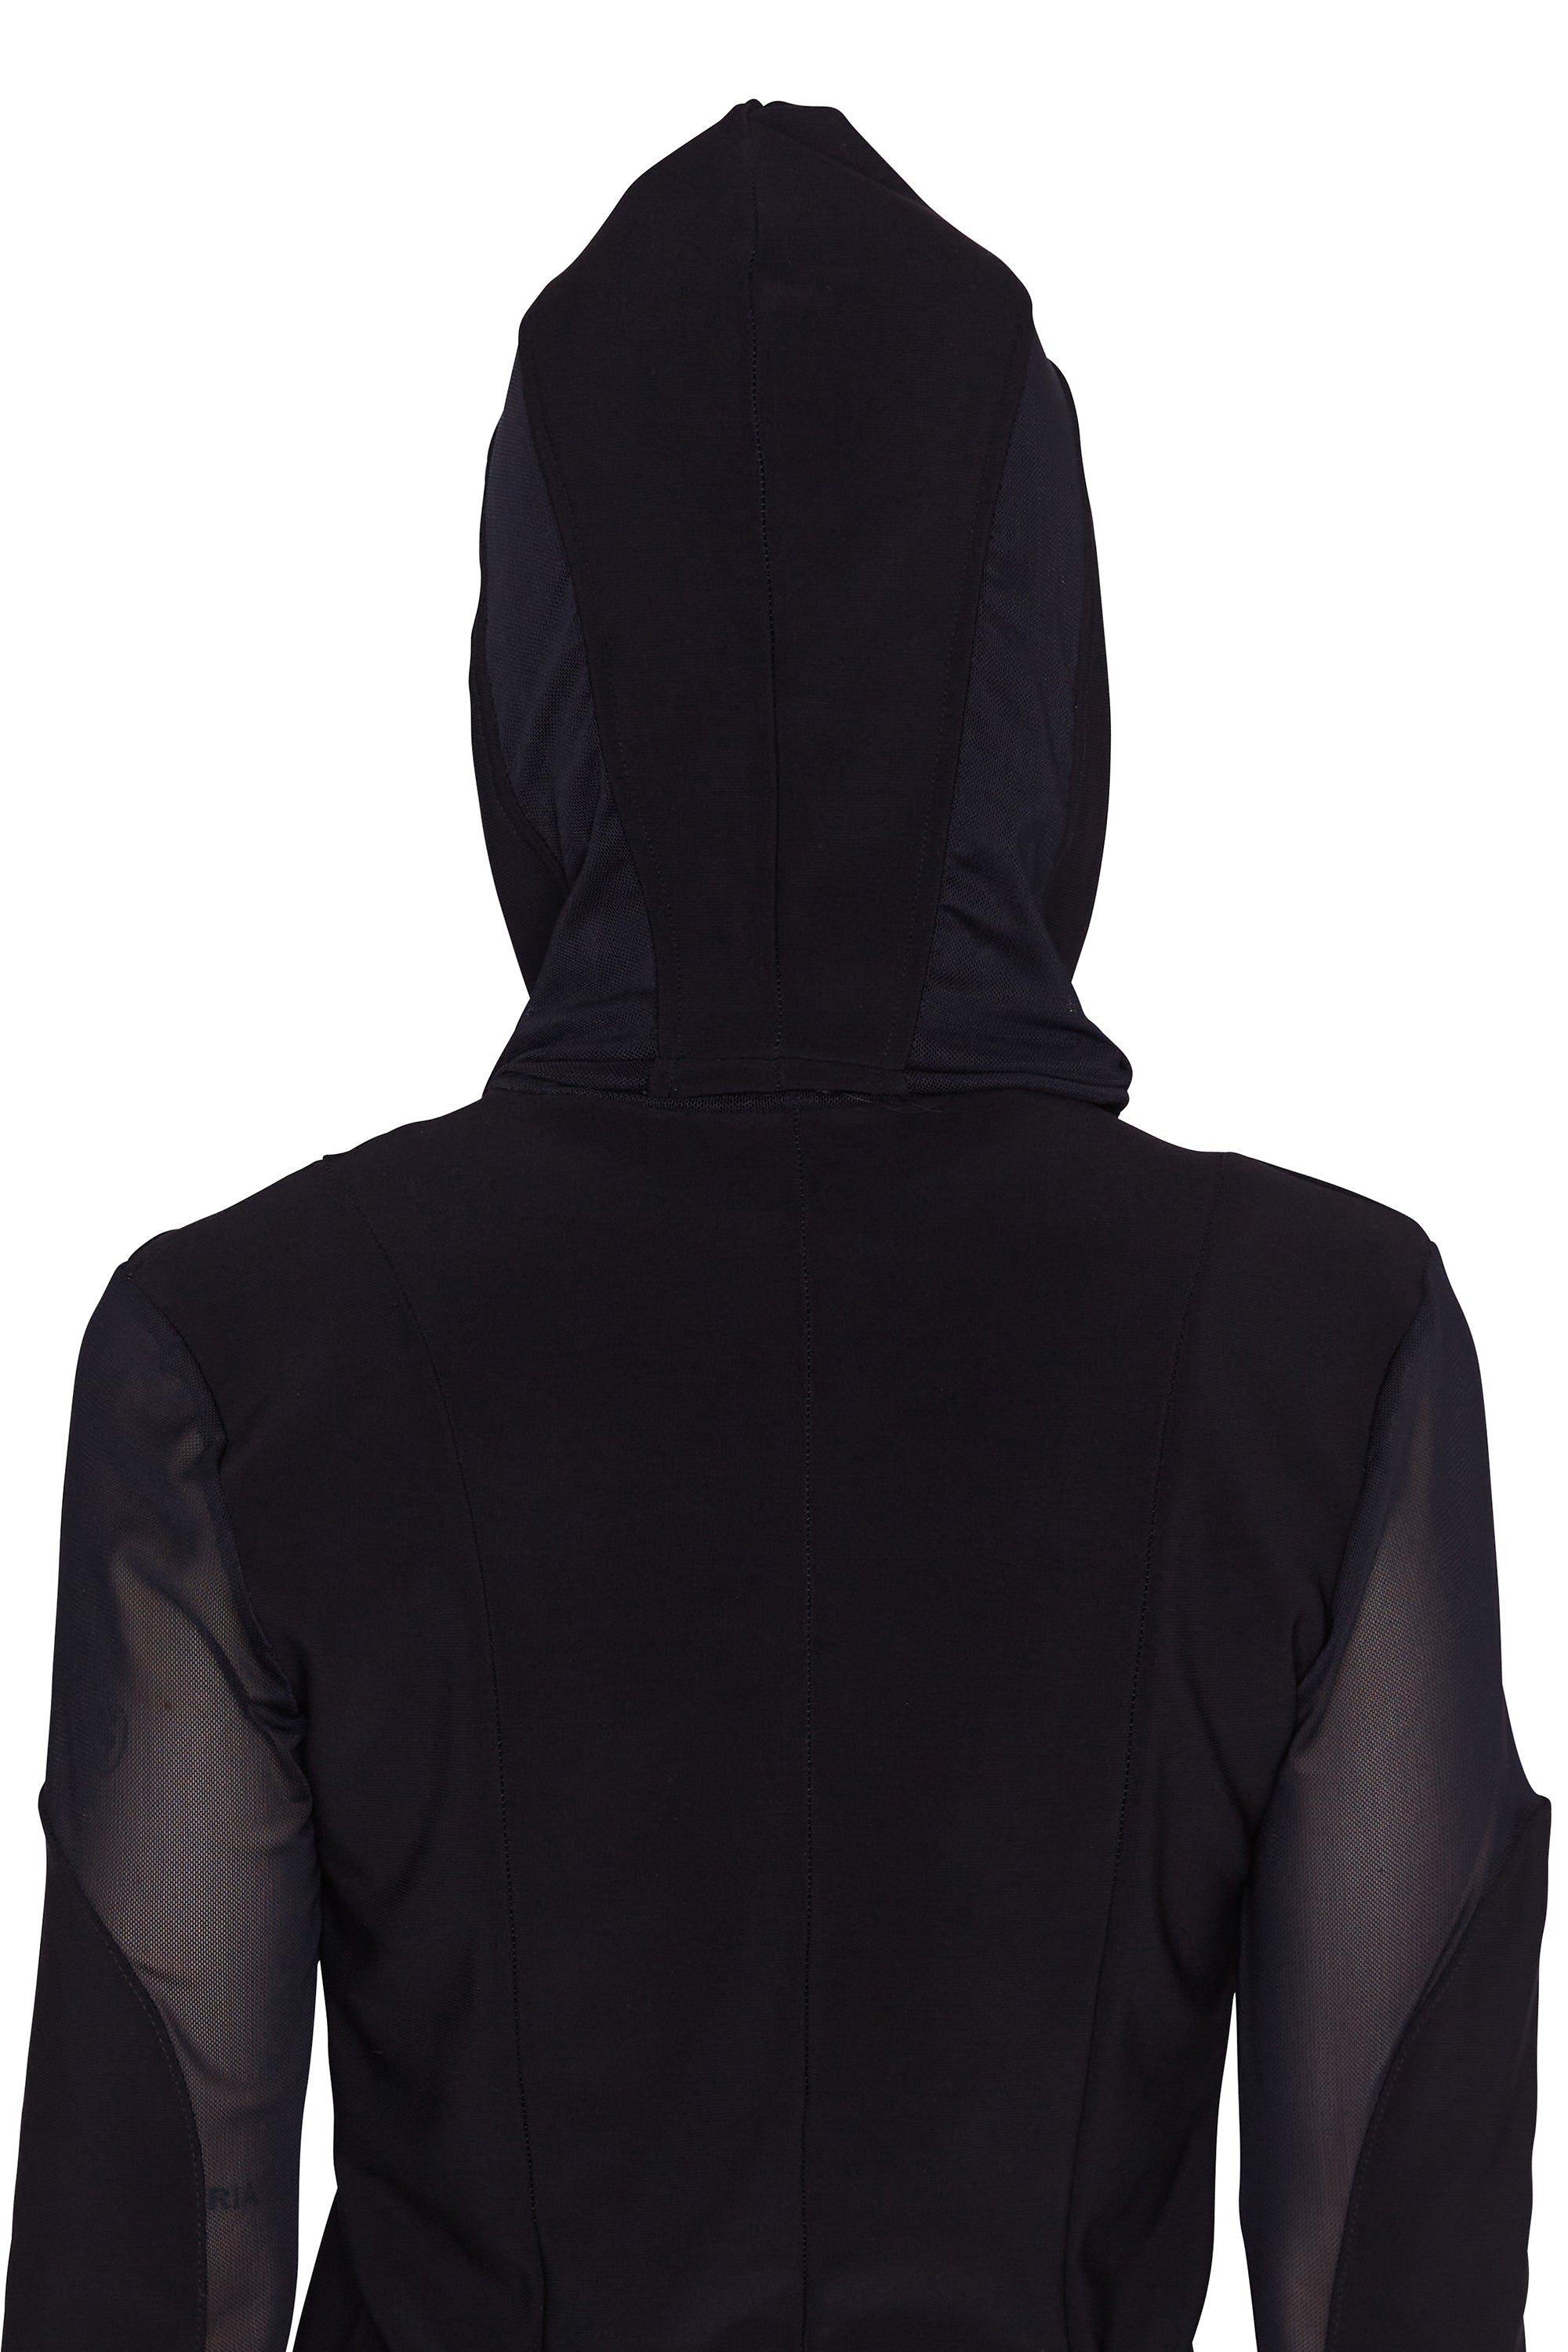 Moto Mesh Head Cover (Black)